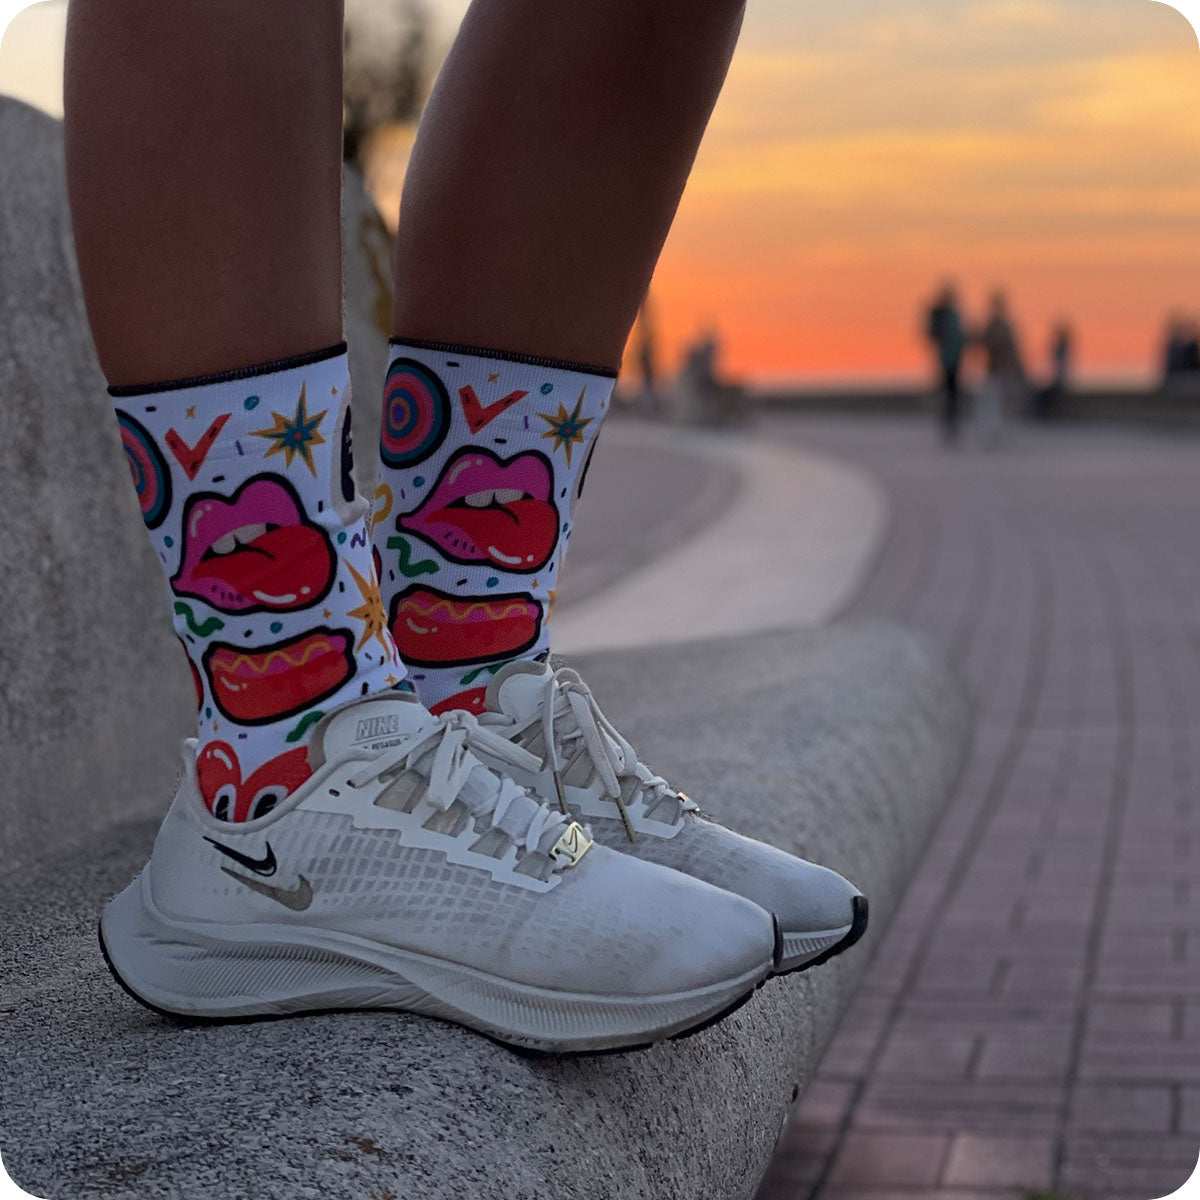 Calcetines divertidos para deporte American Socks Doodle - Mid High